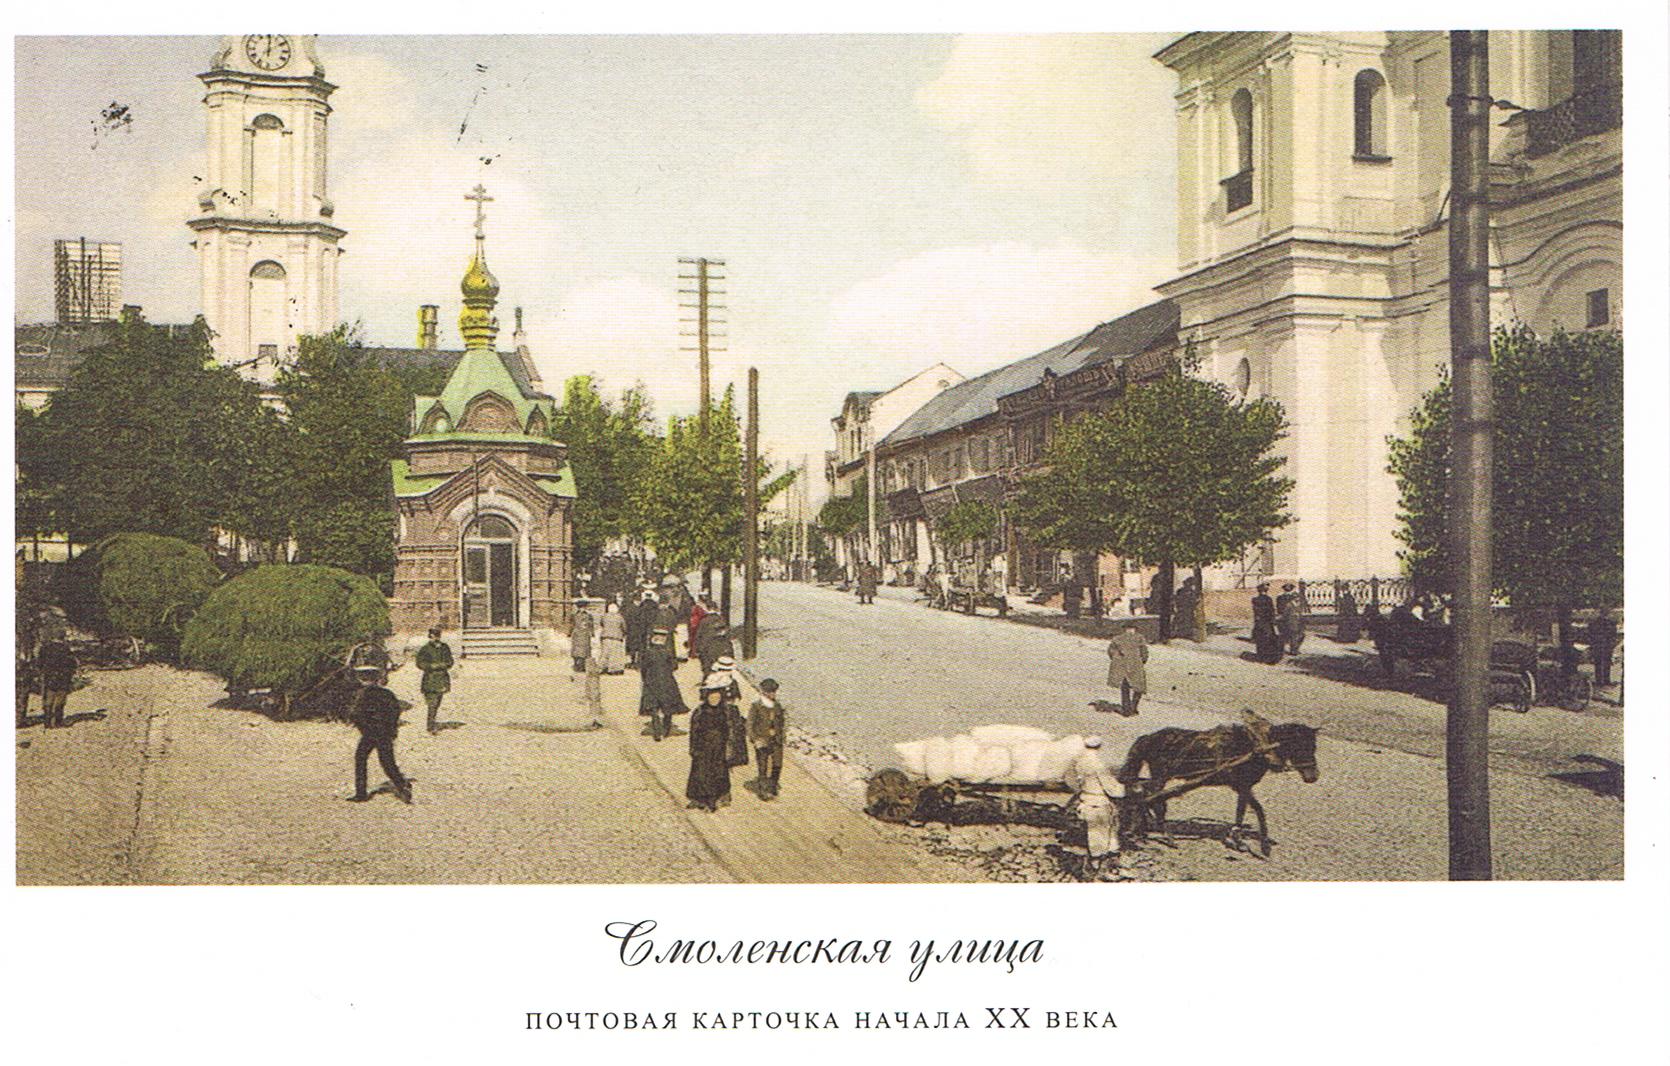 Smolenskaya Straße in Vitebsk um 1900